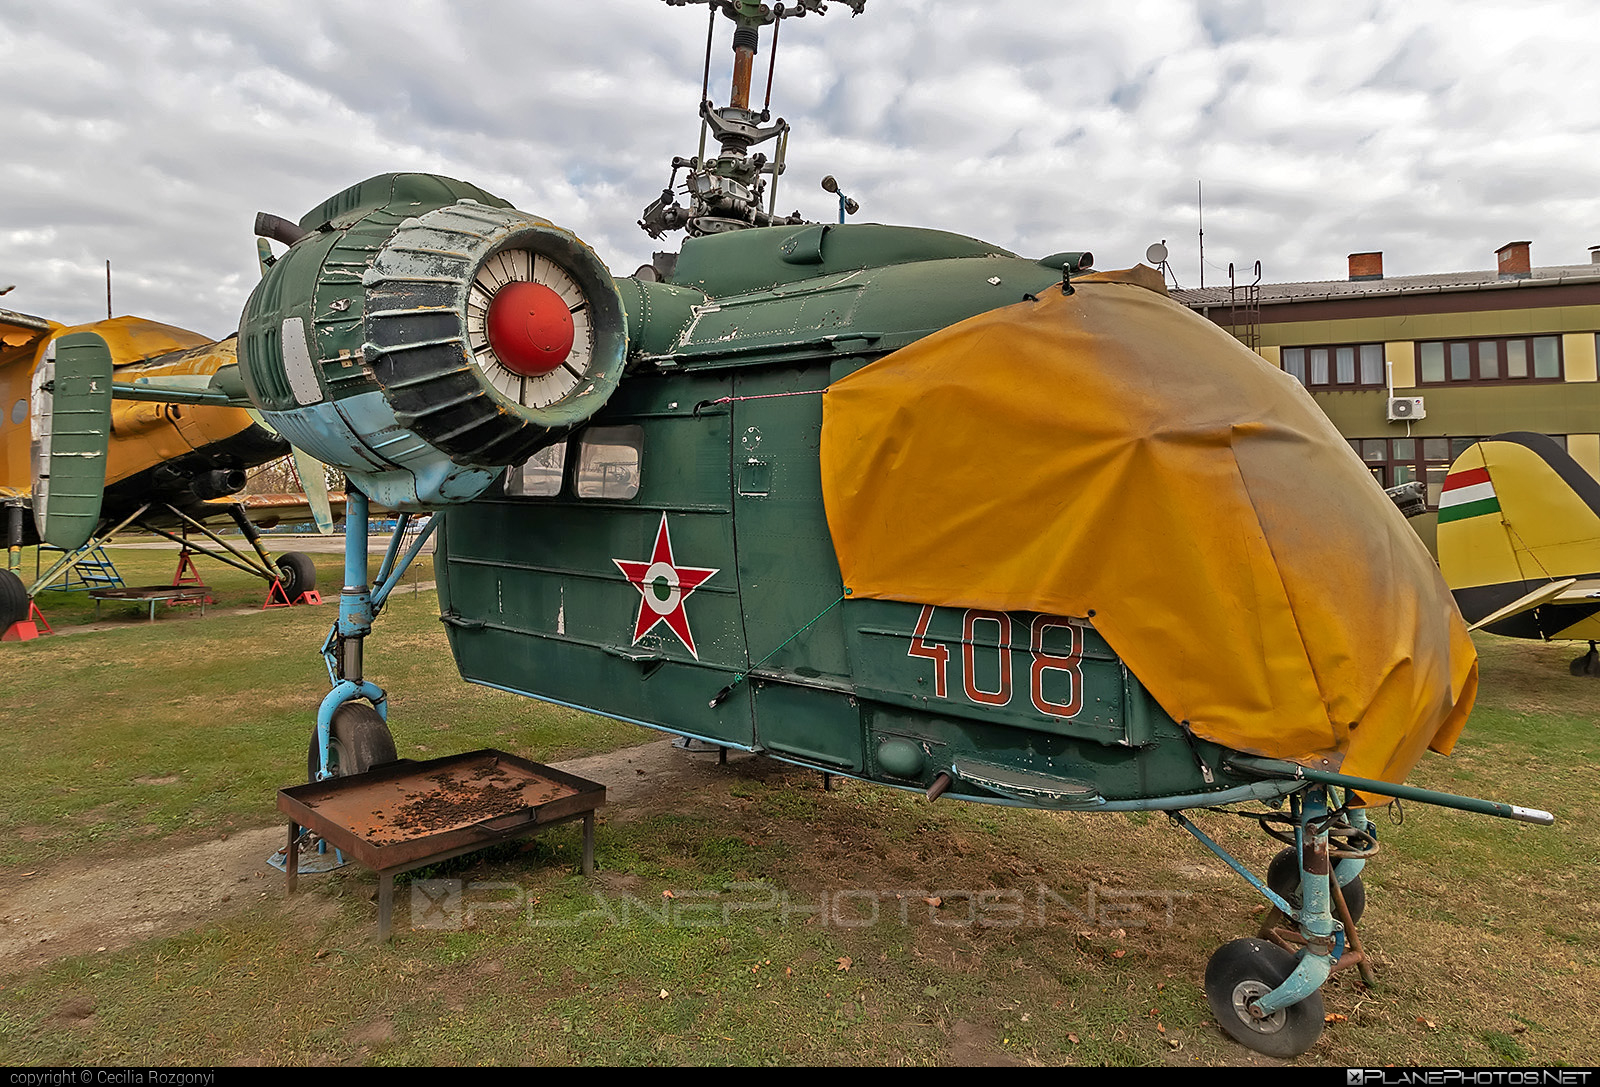 Kamov Ka-26 - 408 operated by Magyar Néphadsereg (Hungarian People's Army) #hungarianpeoplesarmy #ka26 #kamov #kamov26 #kamovka26 #magyarnephadsereg